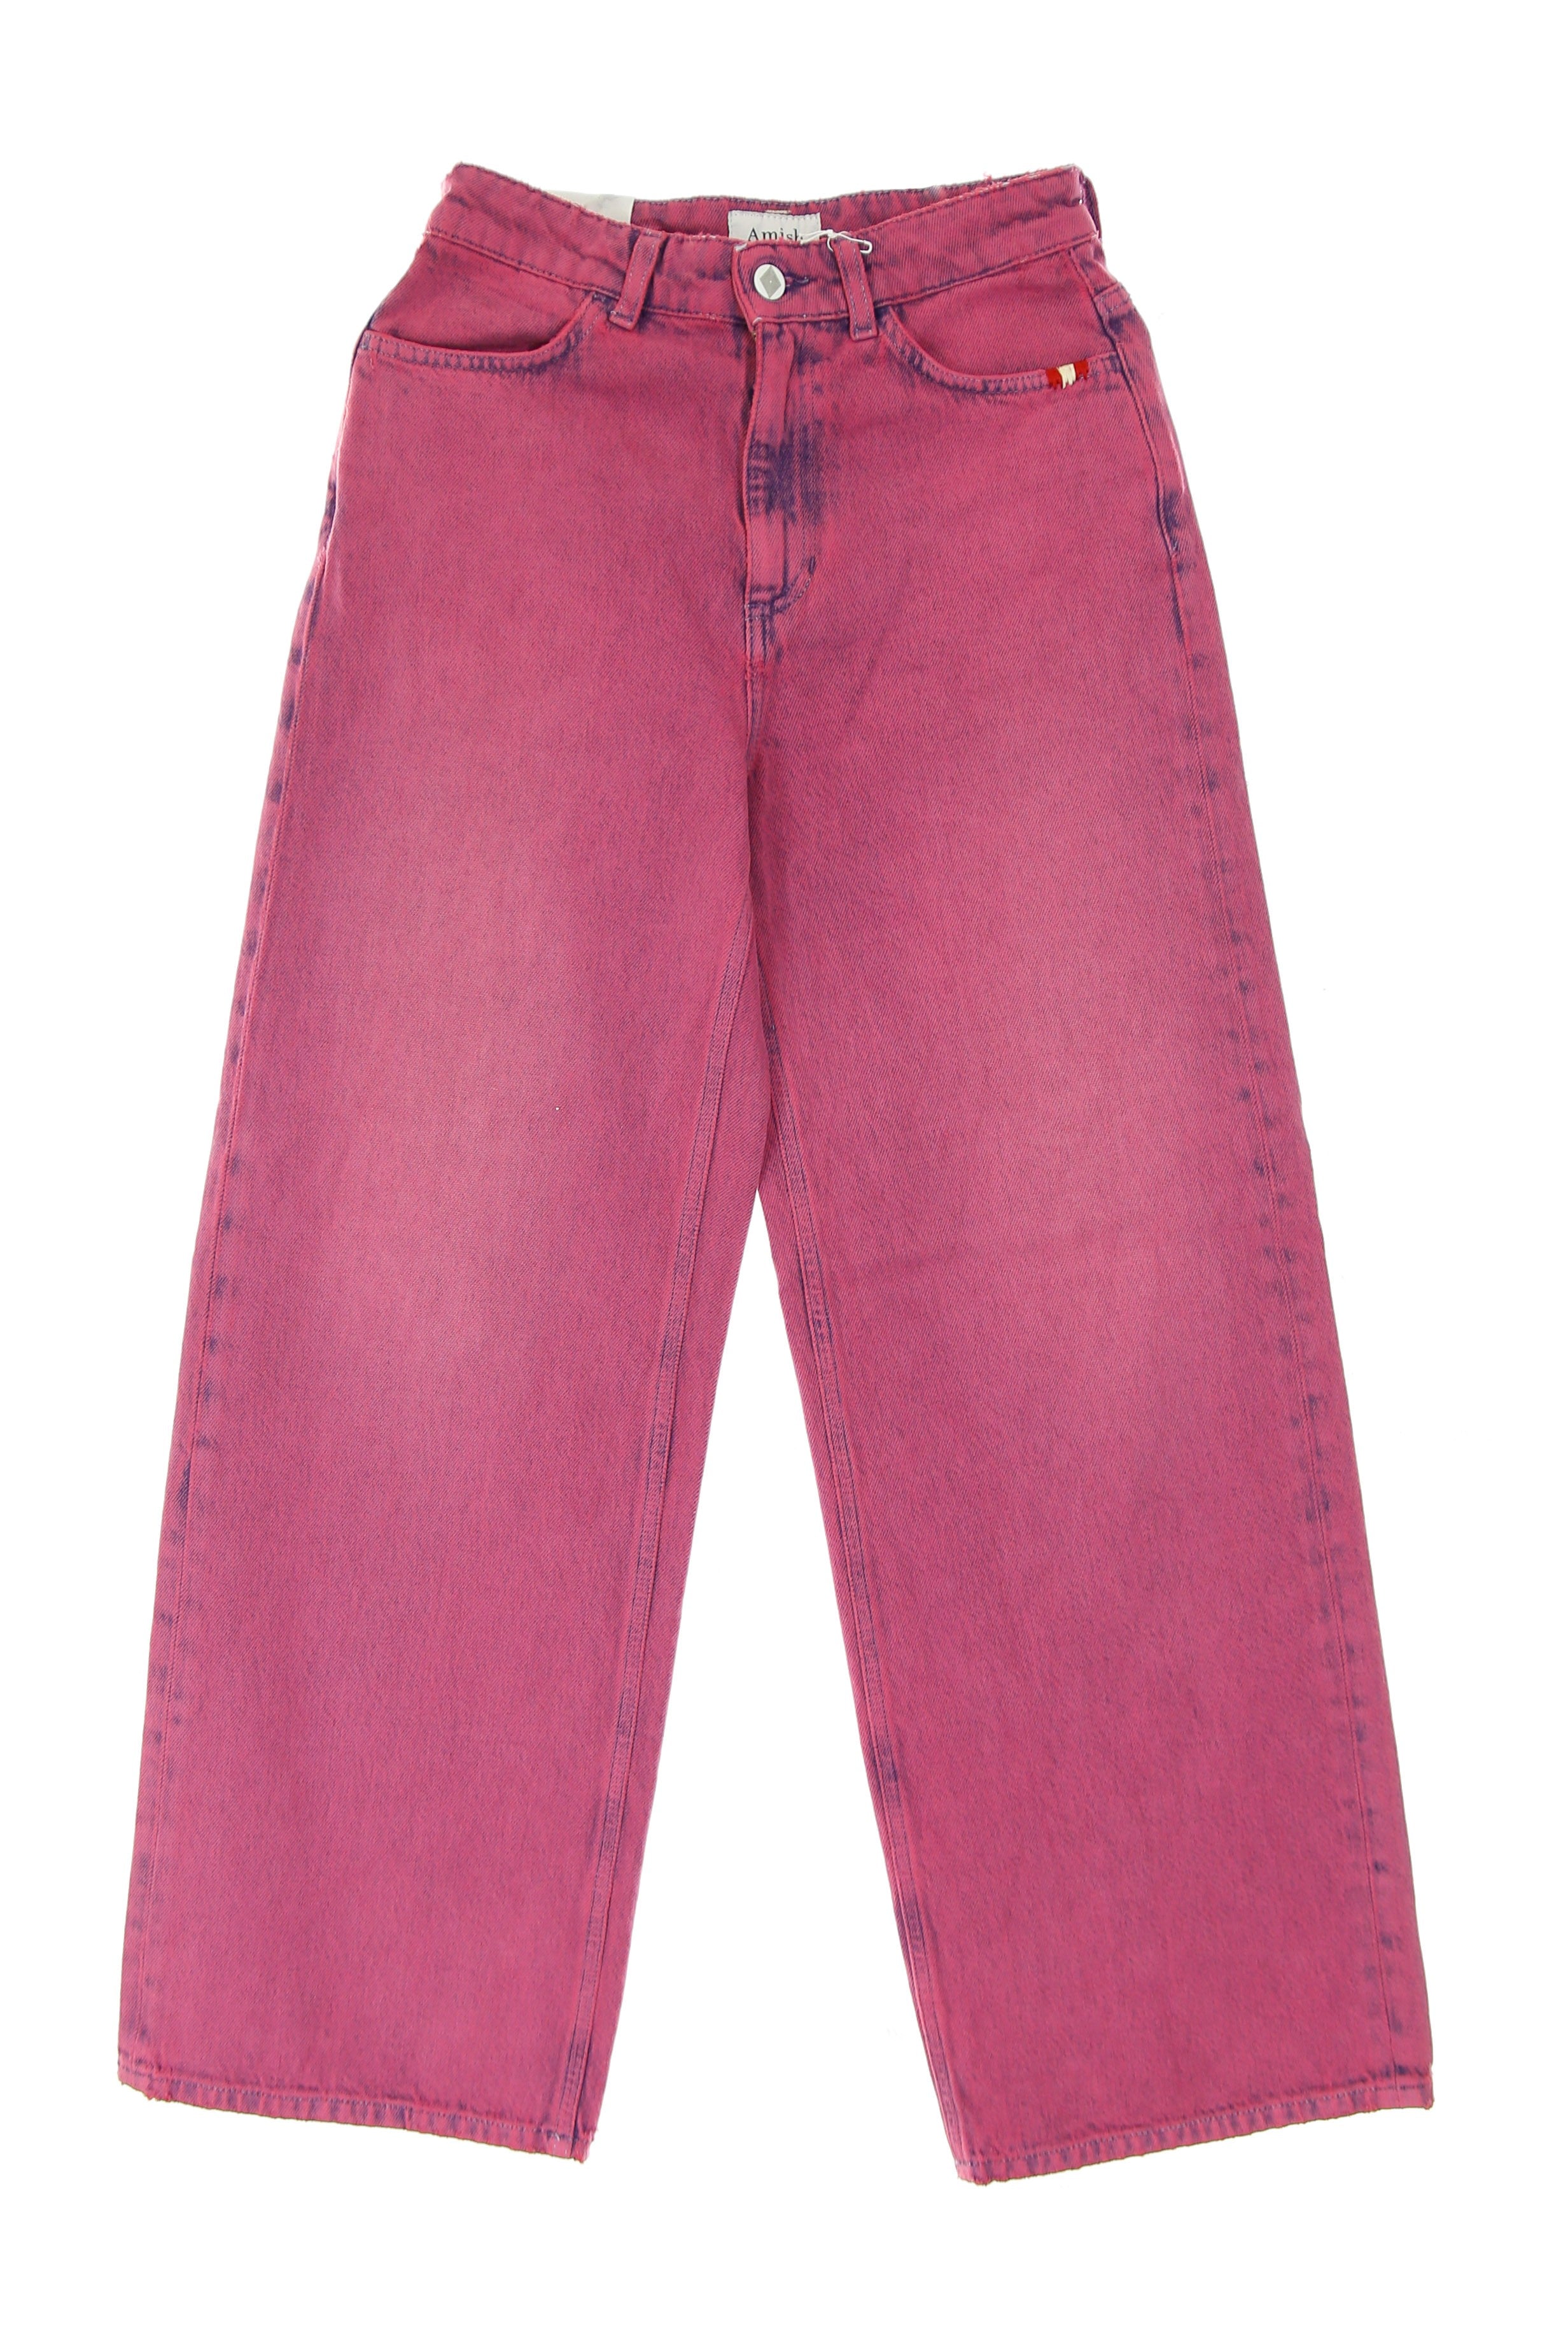 Linda Overdye Pink Women's Jeans